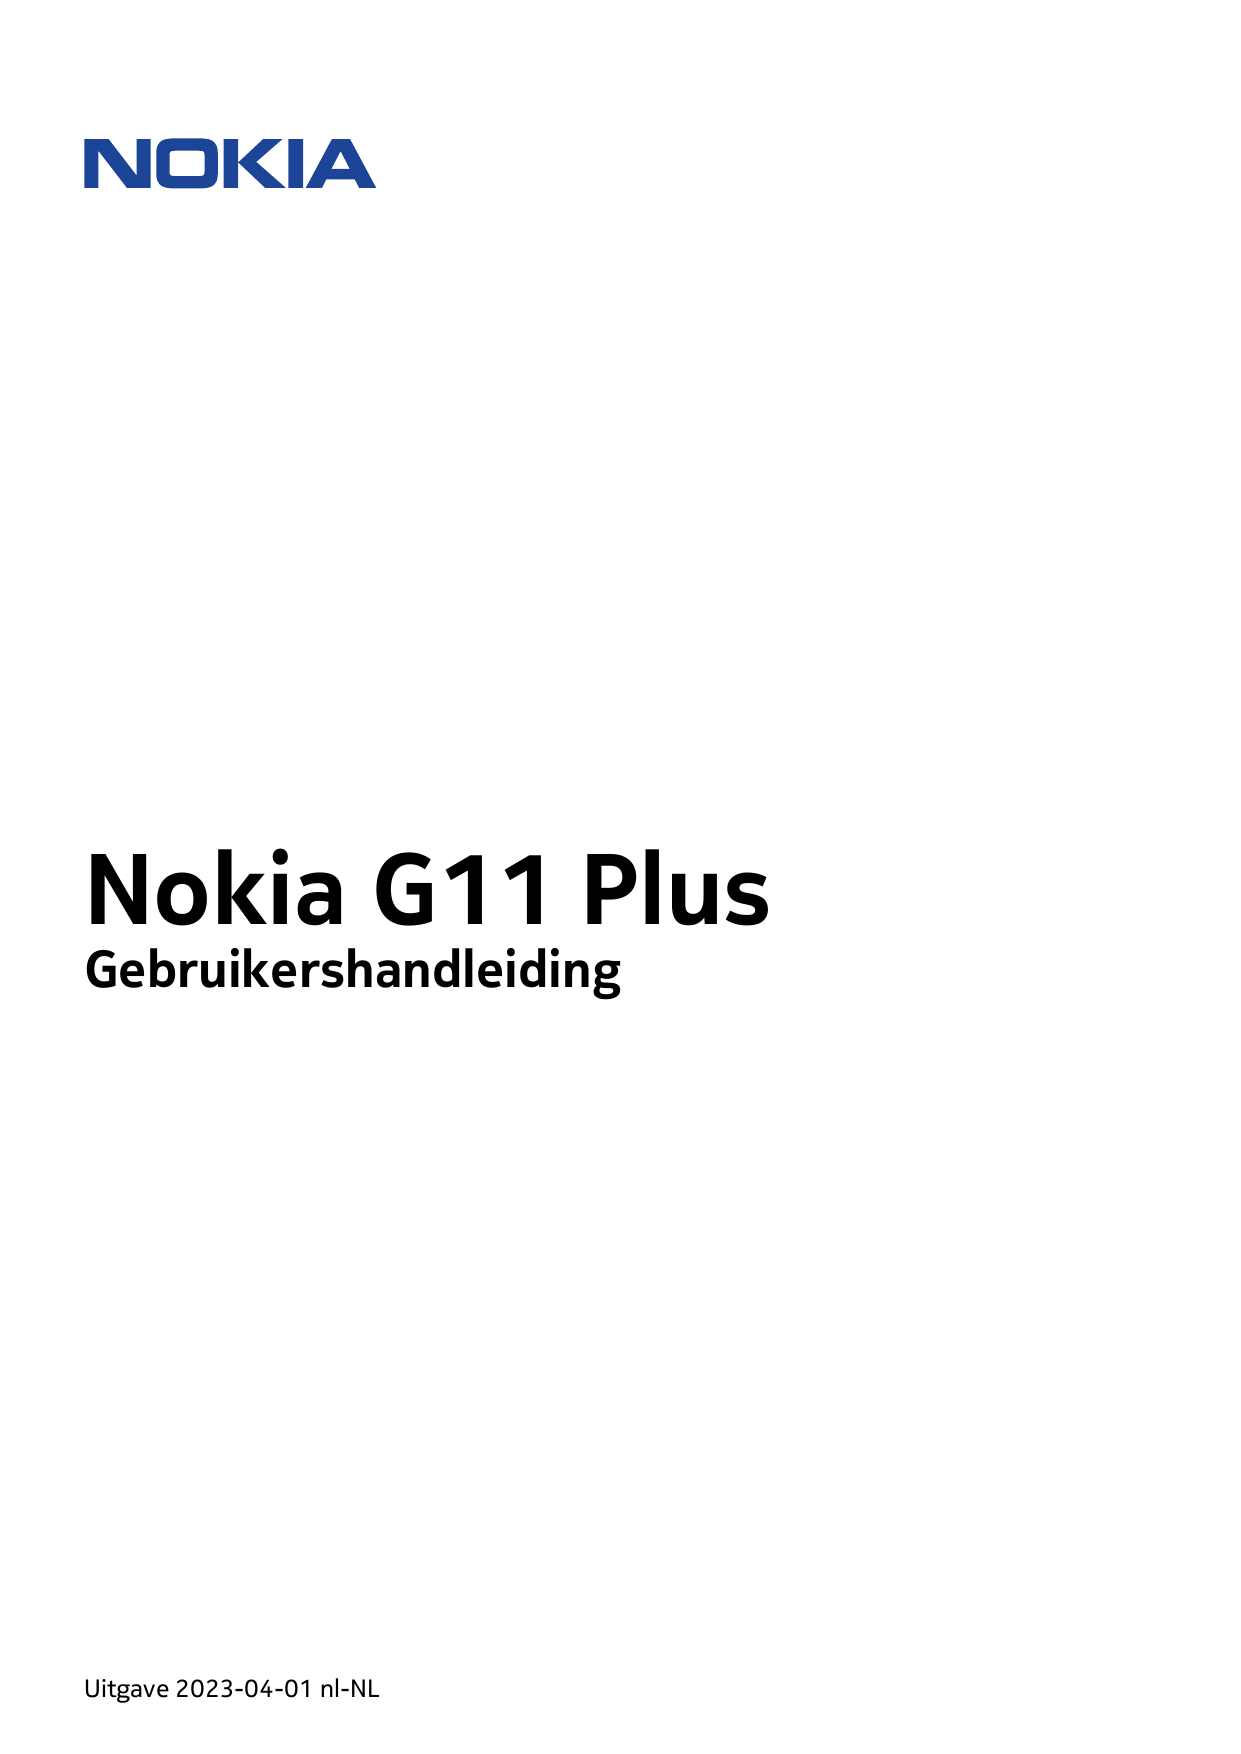 Nokia G11 PlusGebruikershandleidingUitgave 2023-04-01 nl-NL